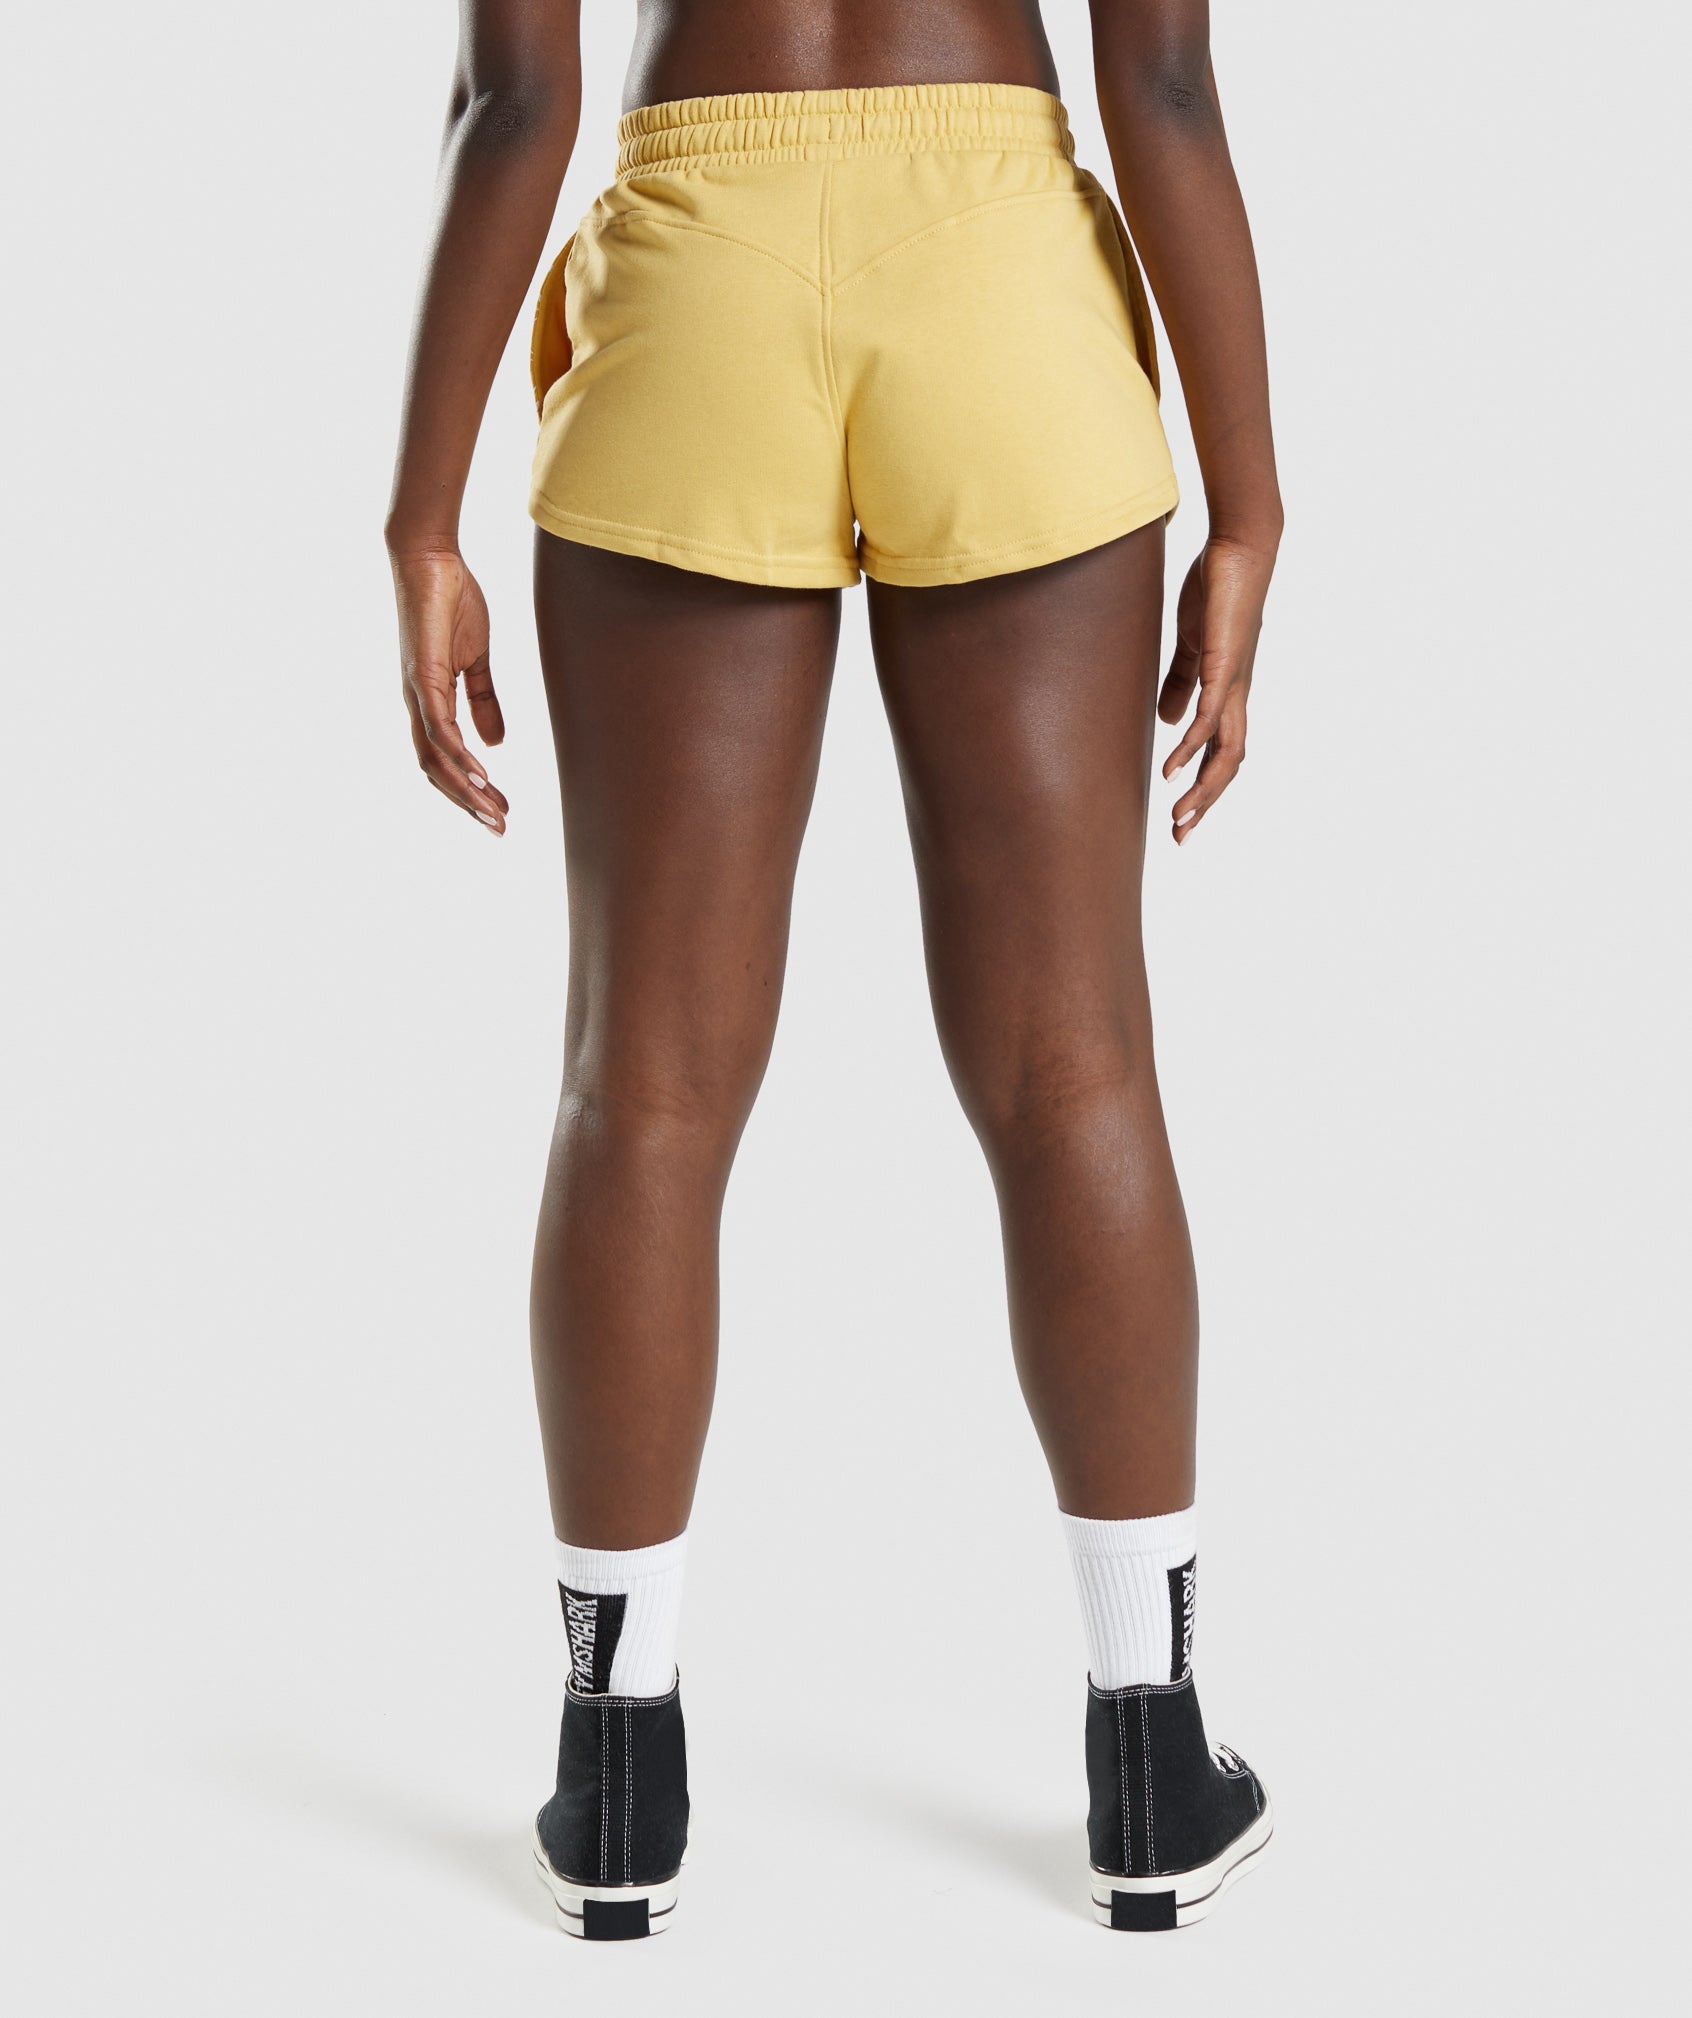 Women's Nike Pro 7 Compression Shorts